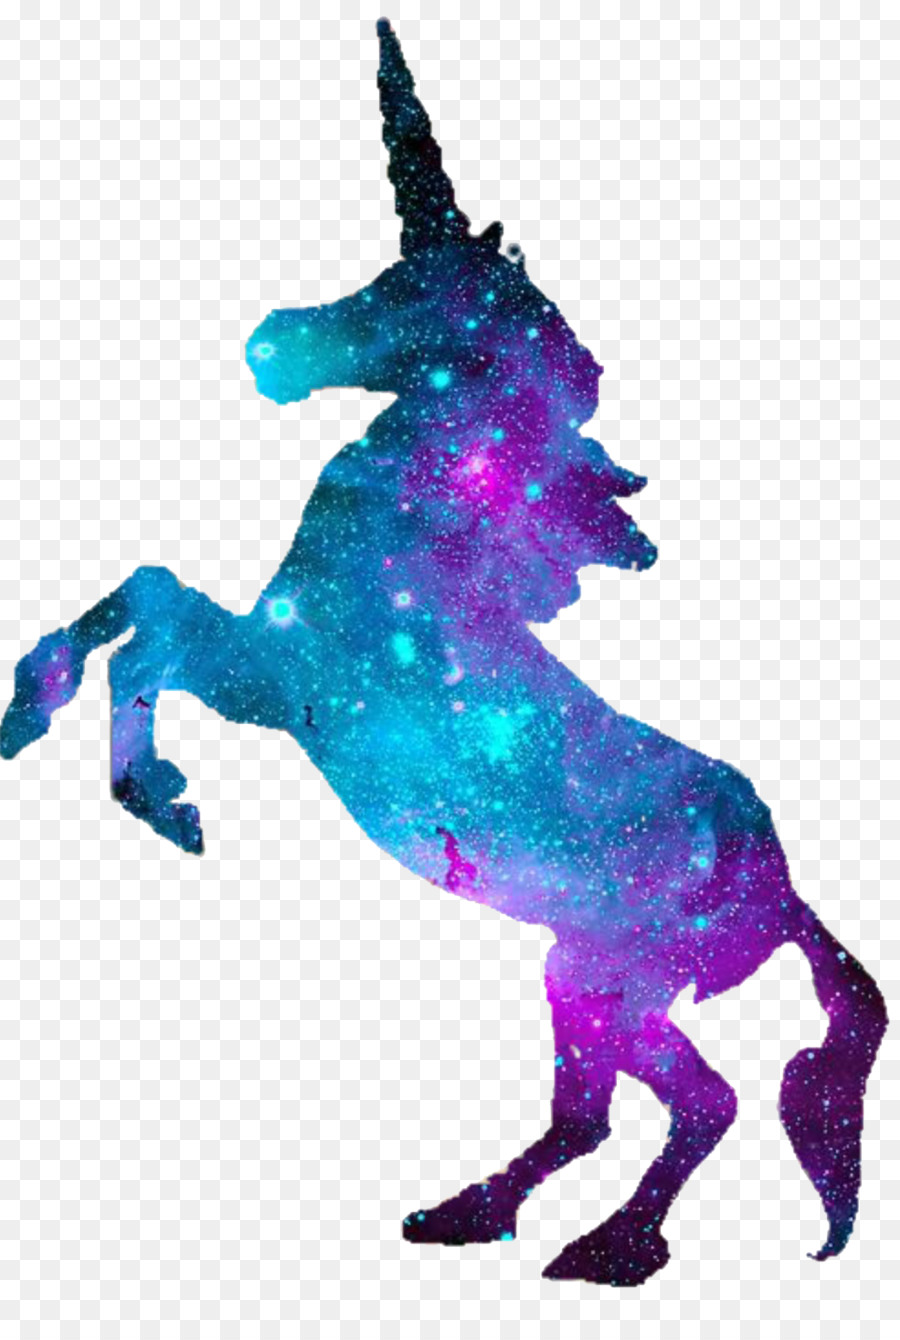 Unicorn Silhouette Pegasus Clip art - unicorn png download - 985*1454 - Free Transparent Unicorn png Download.